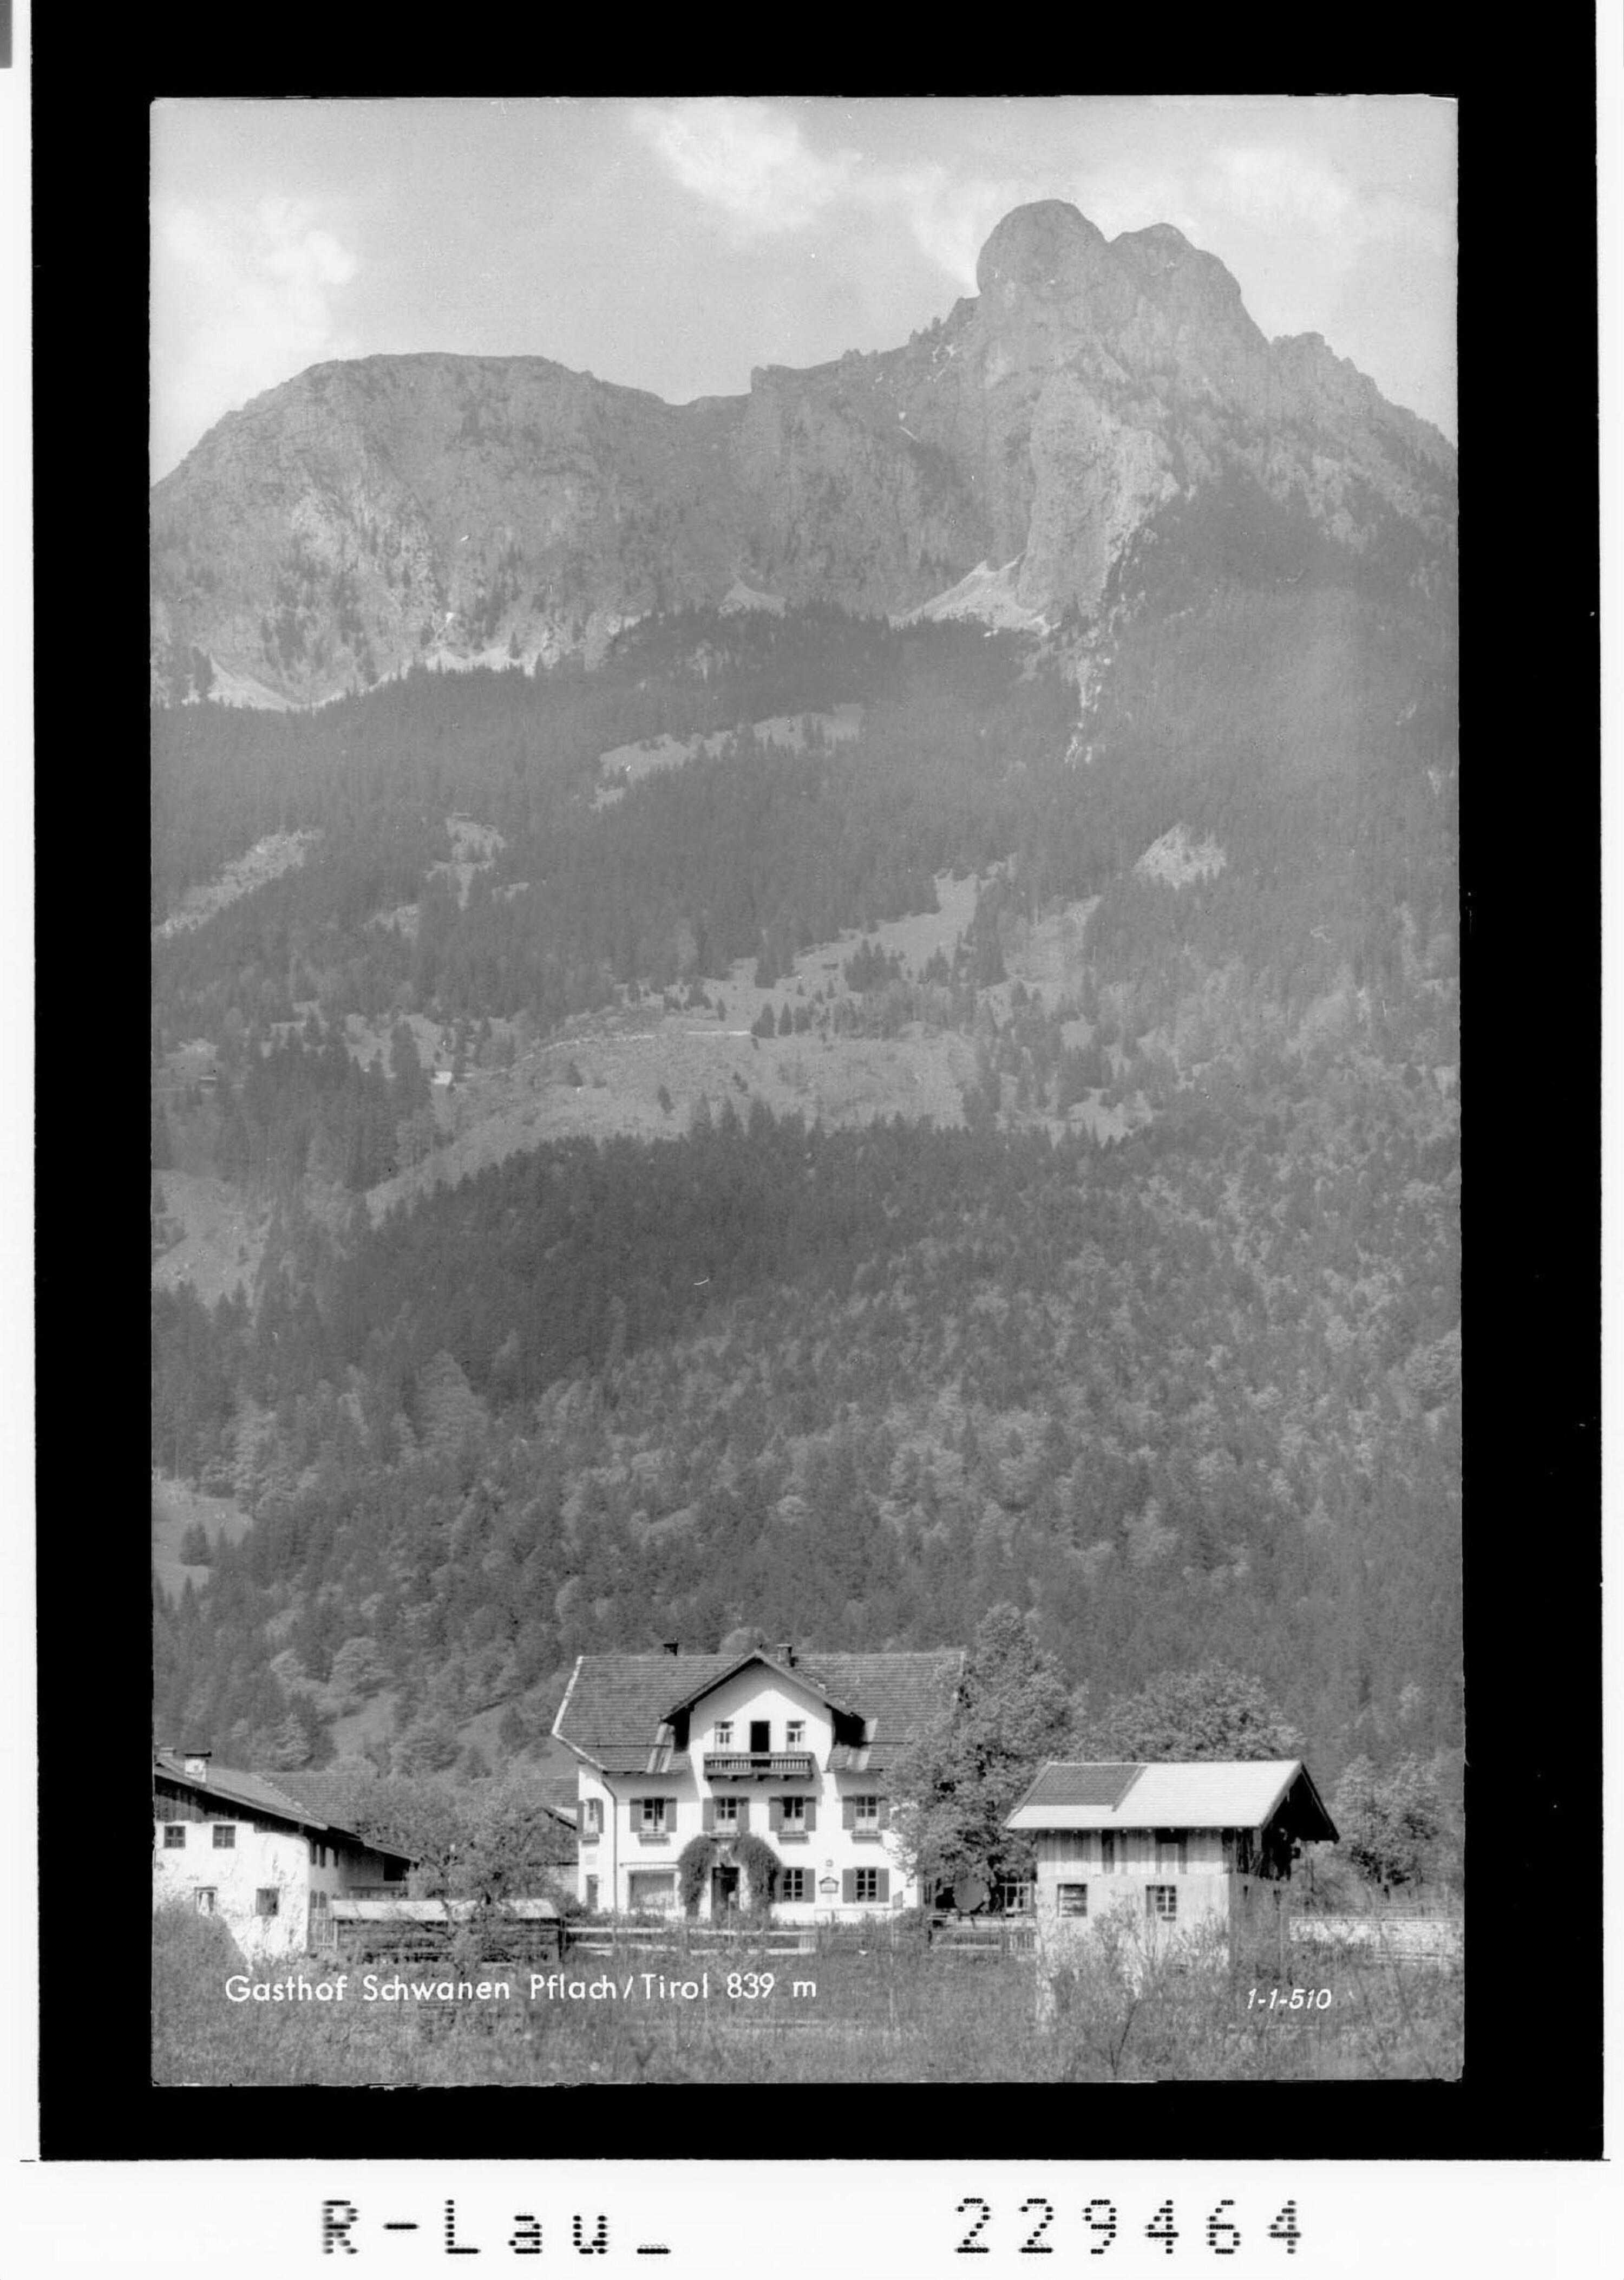 Gasthof Schwanen - Pflach / Tirol 839 m></div>


    <hr>
    <div class=